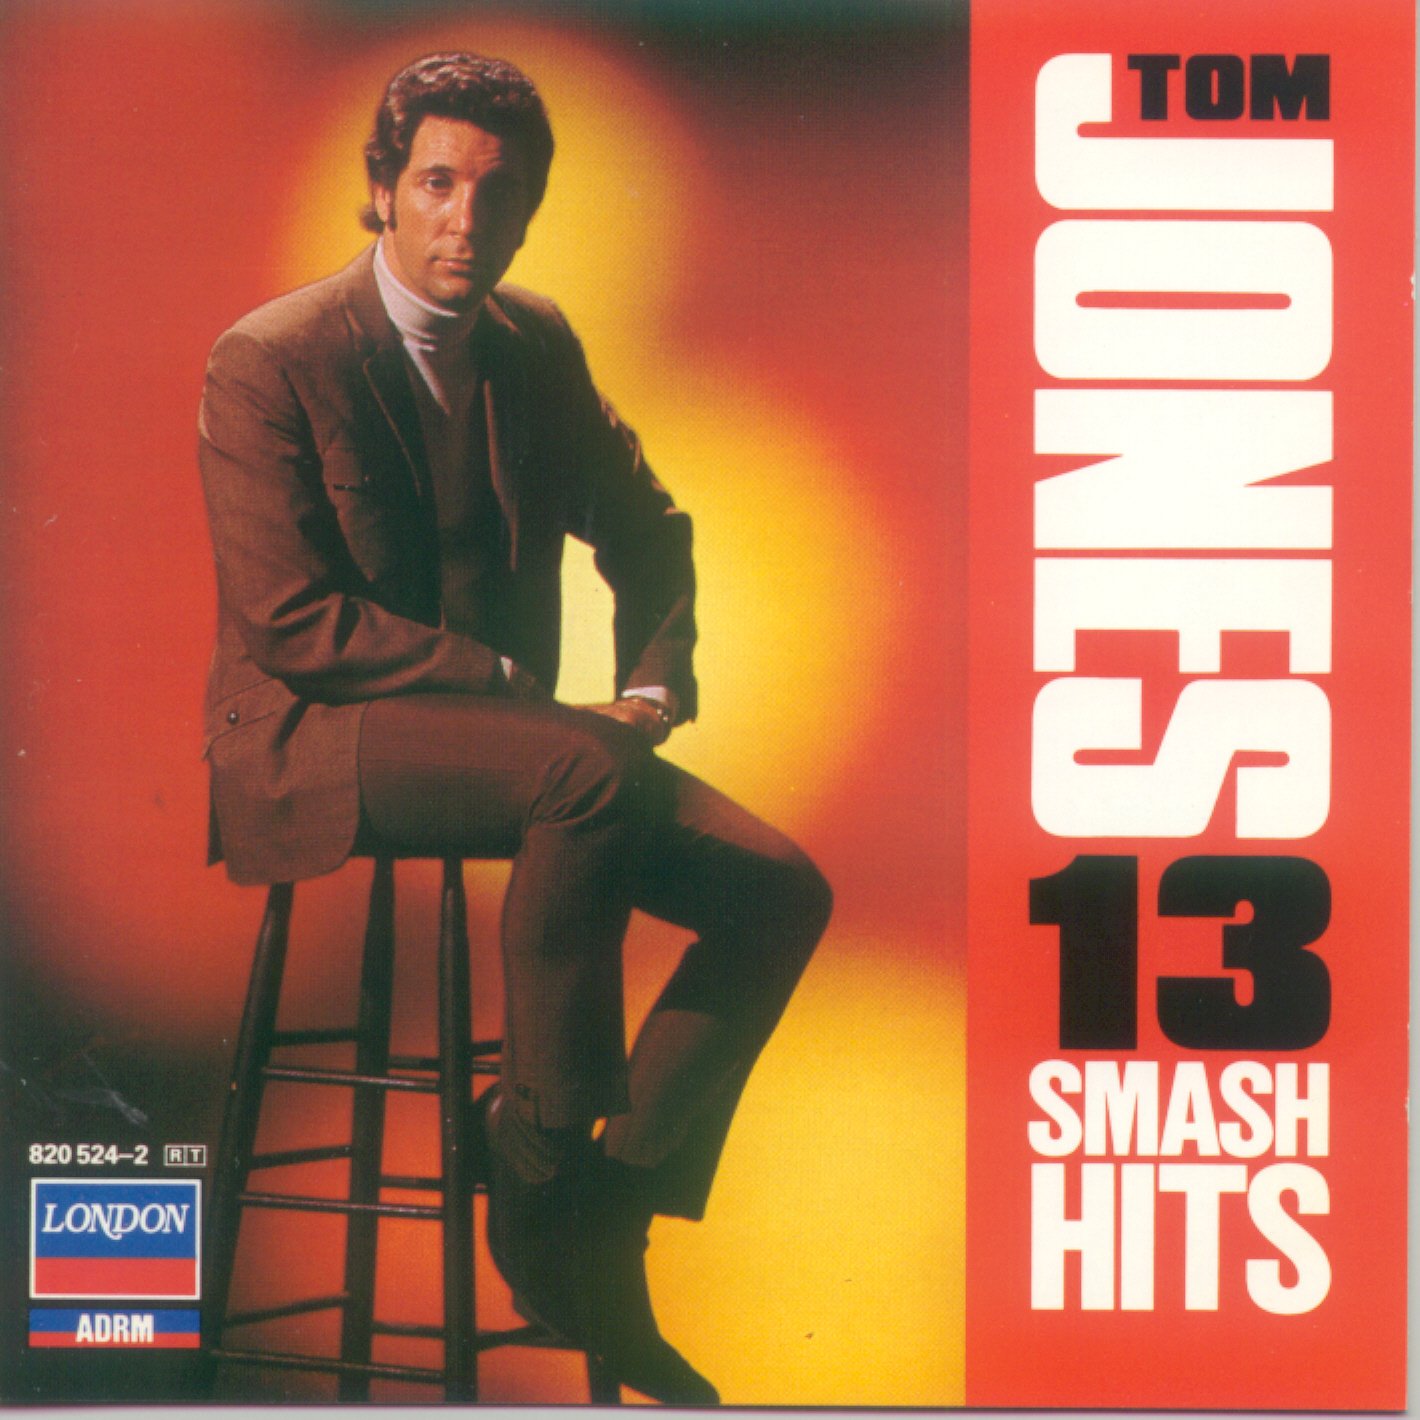 TOM JONES - 13 SMASH HITS